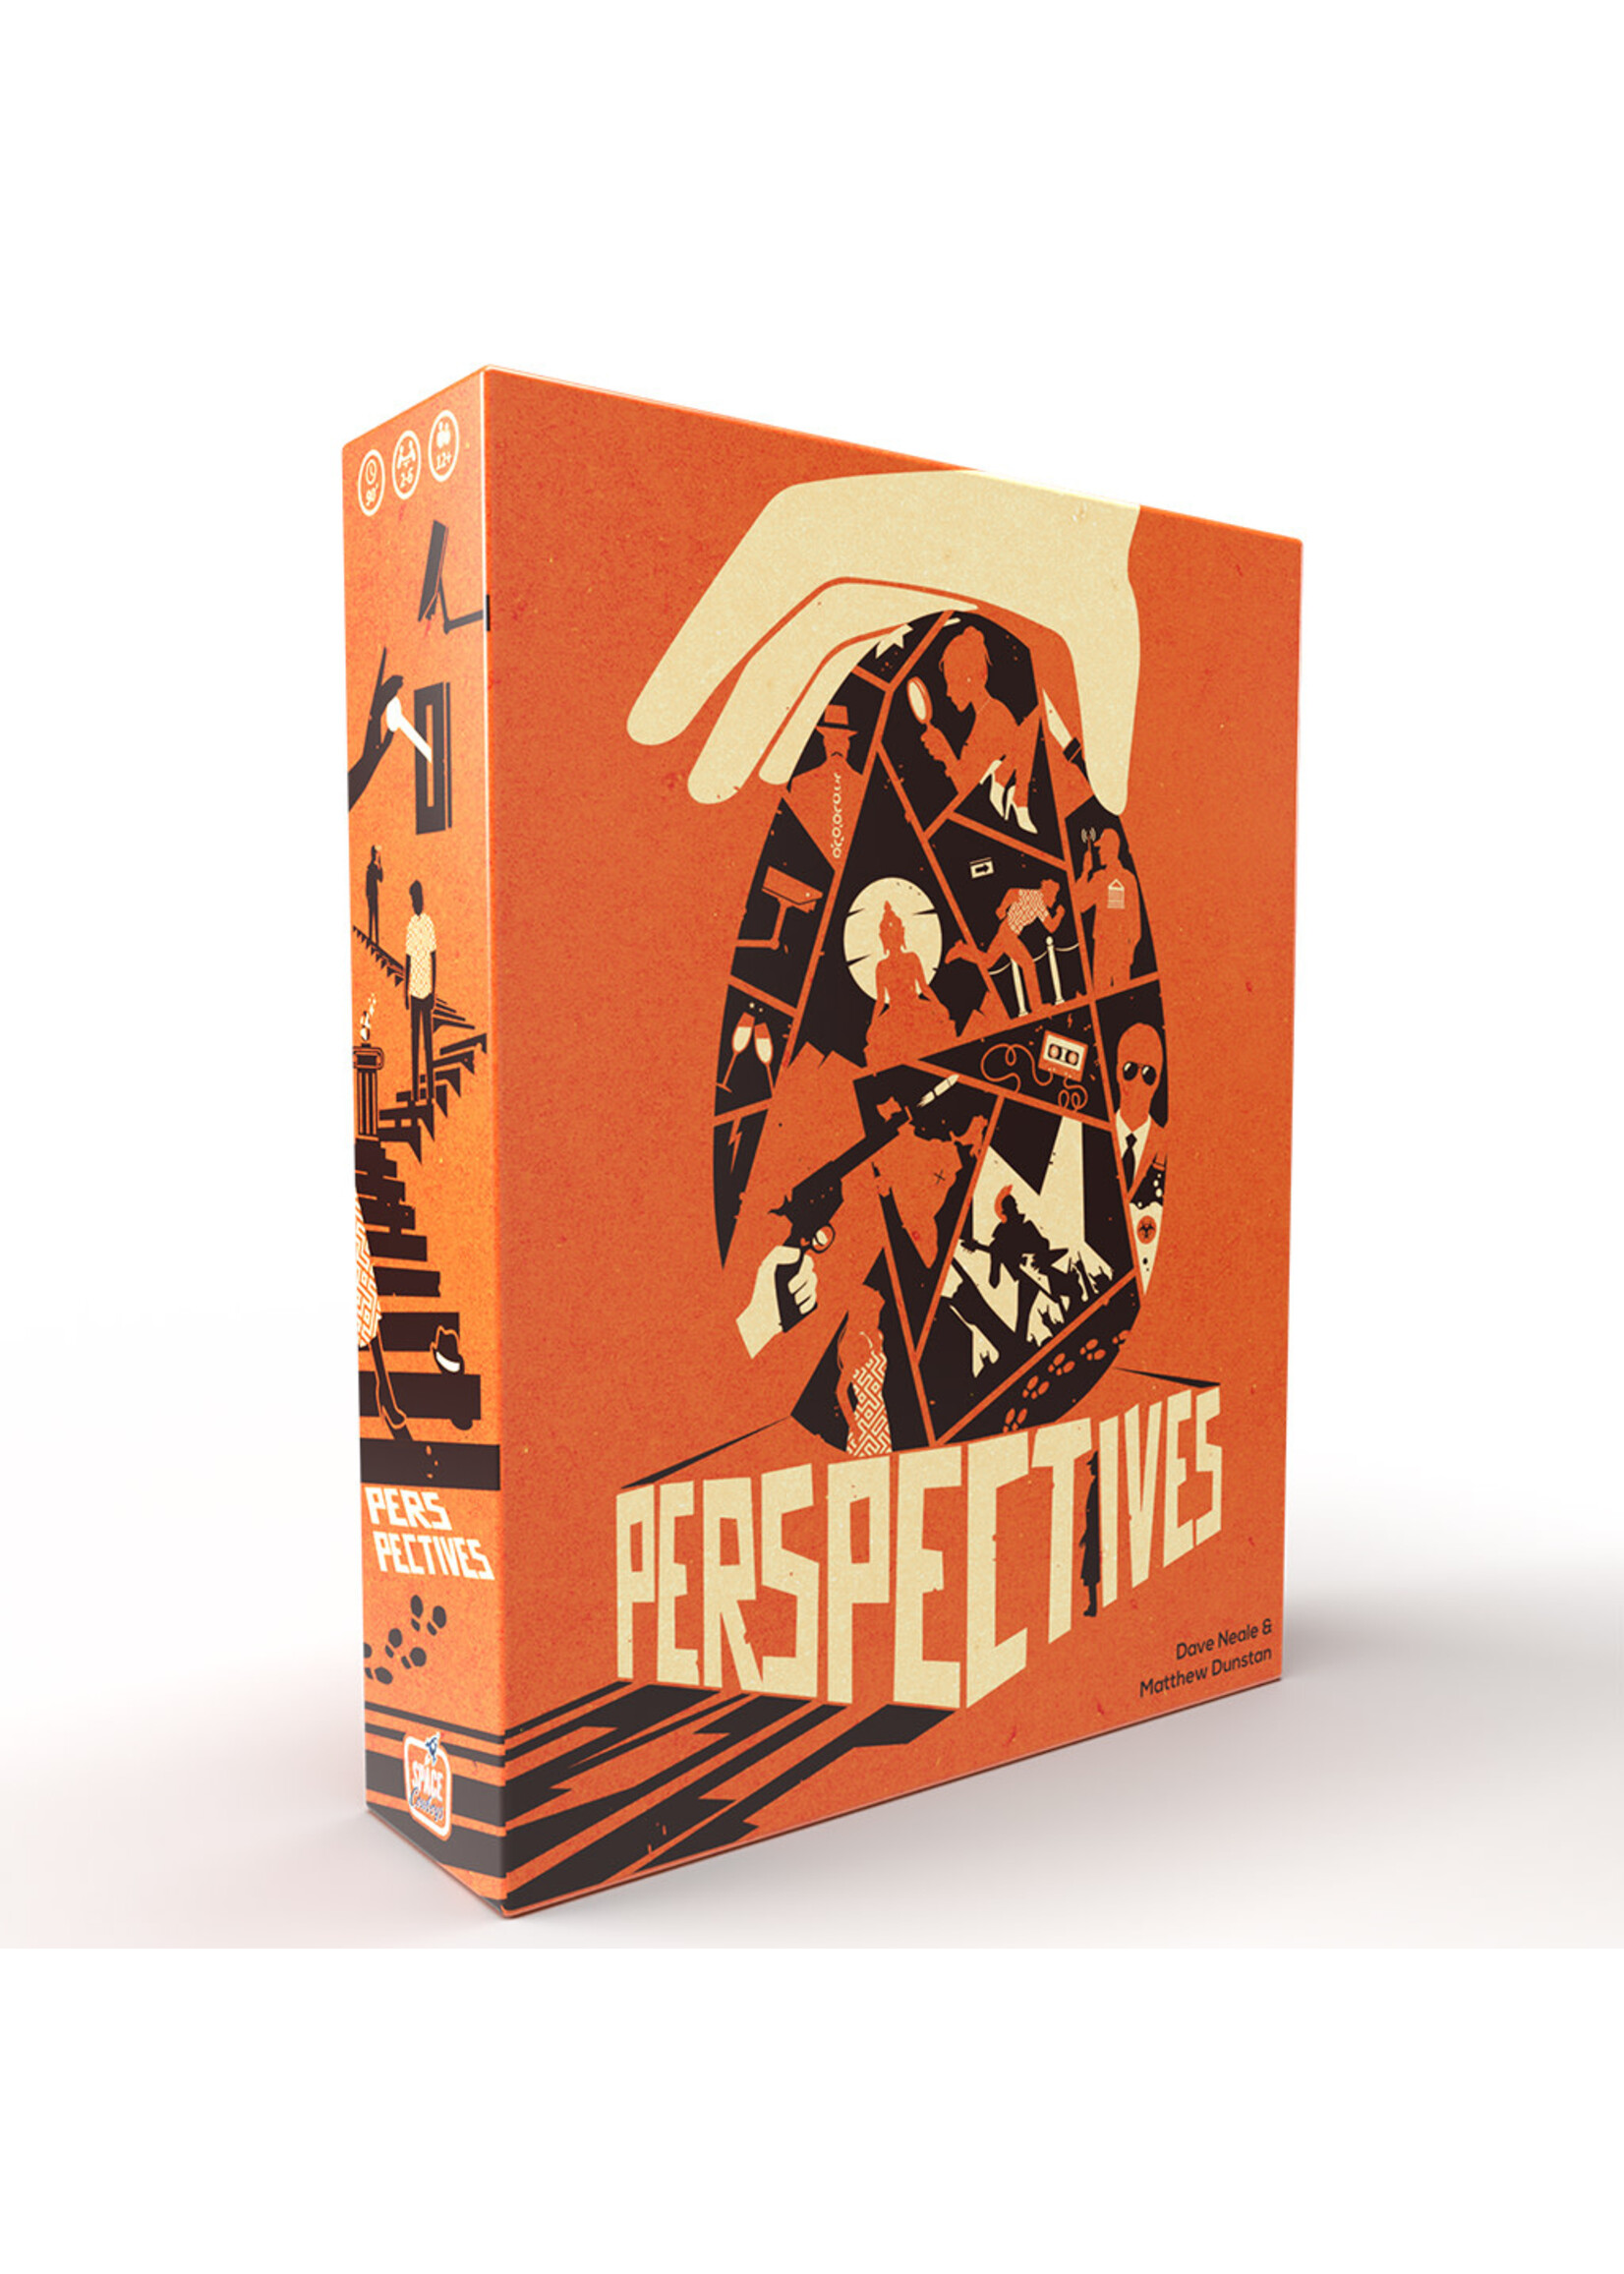 Space Cowboys Perspectives (Orange Box)